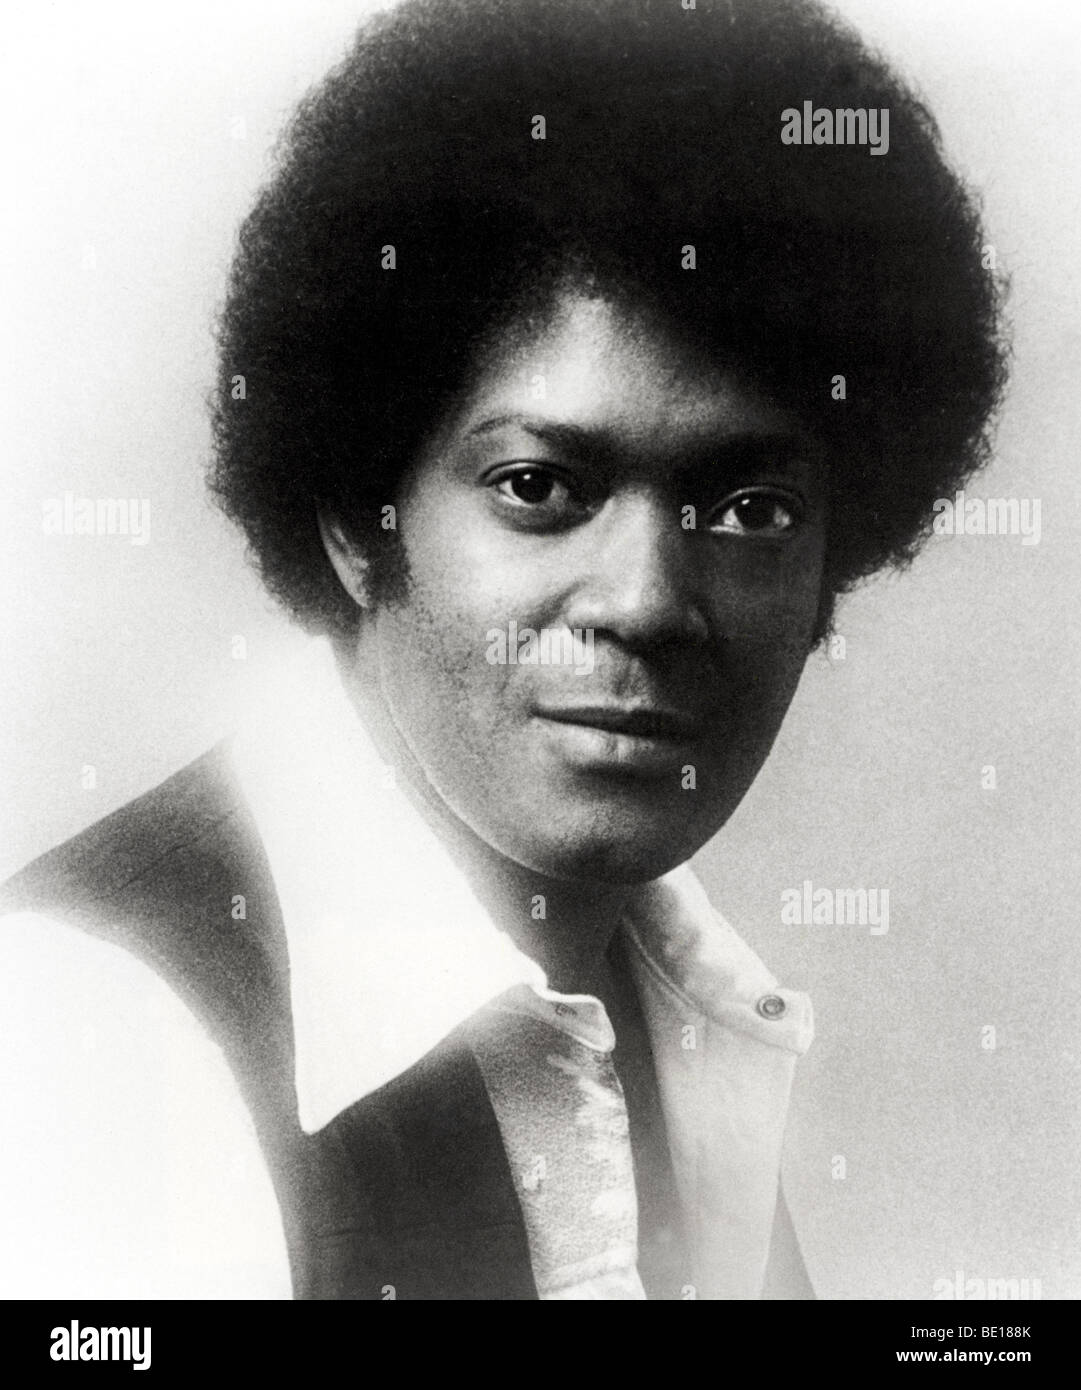 DOBIE GRAY - US singer about 1975 Stock Photo